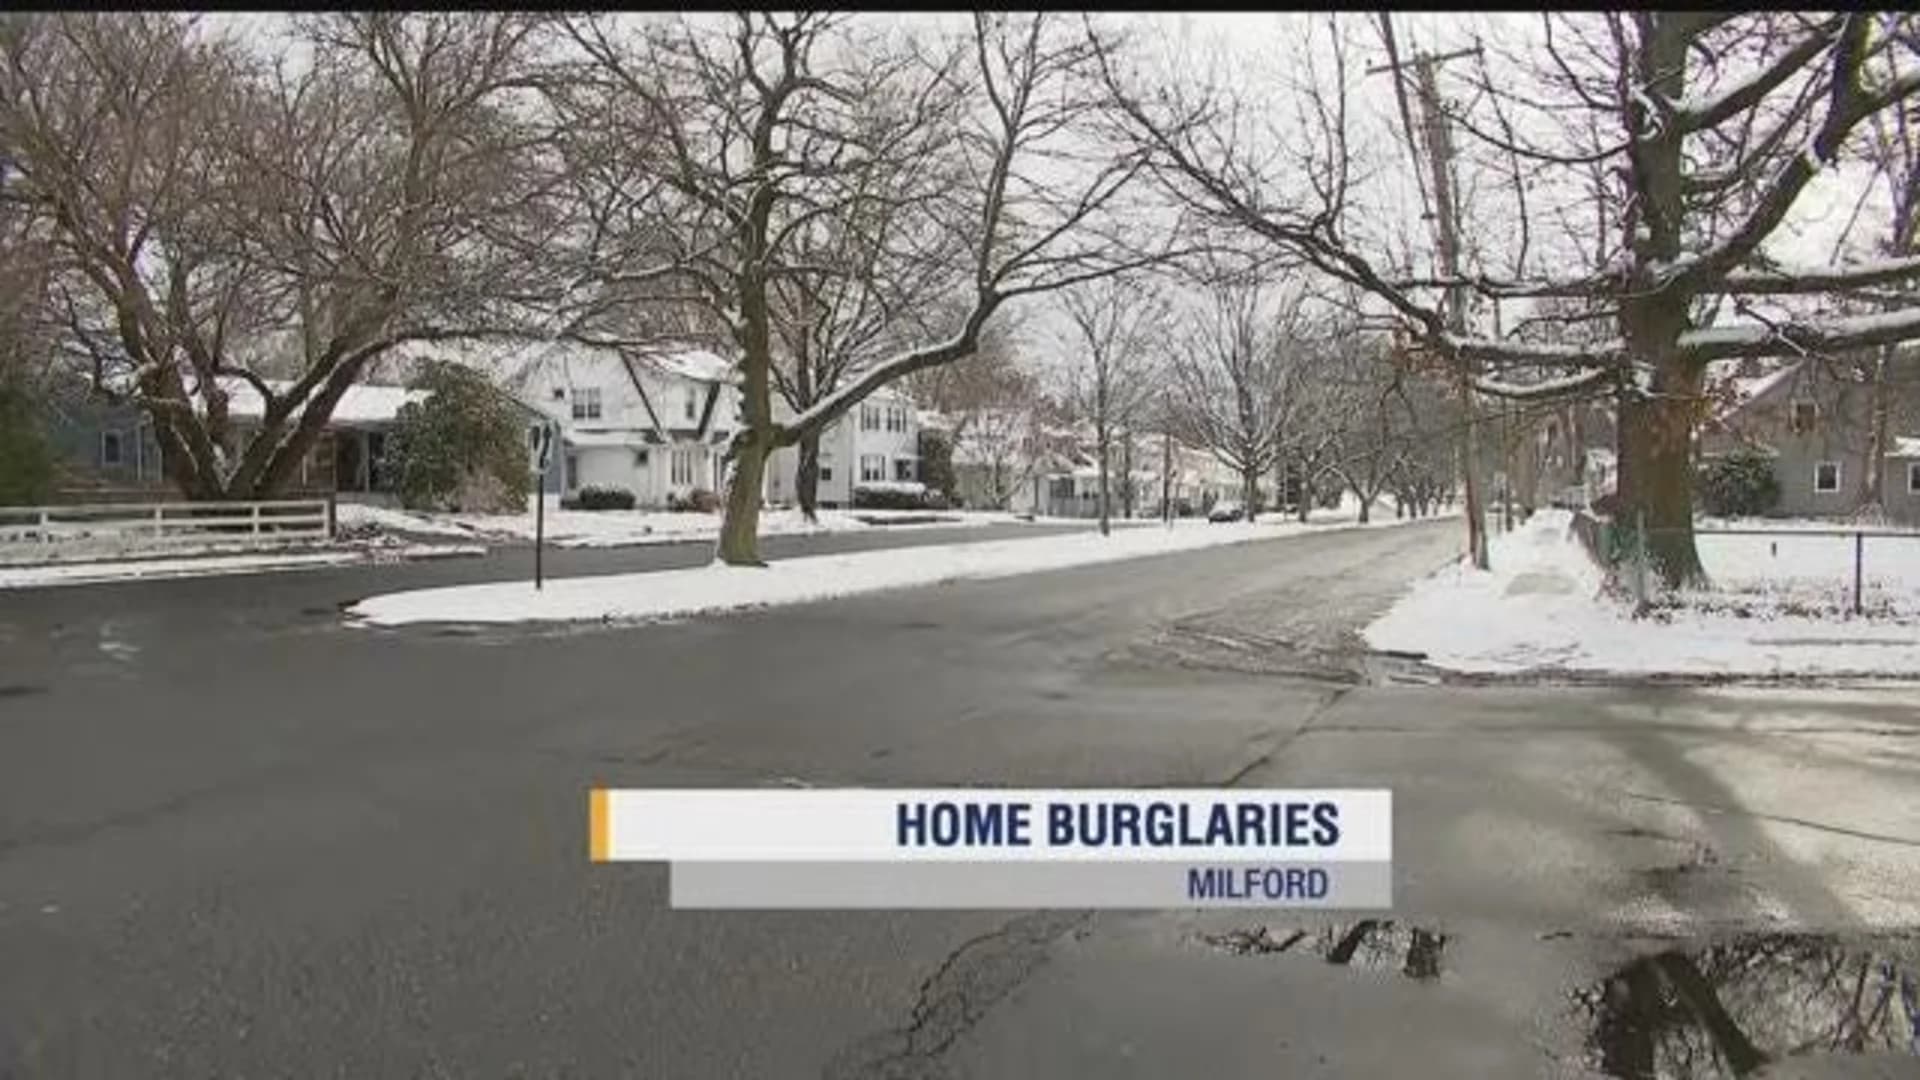 Milford police intensify efforts to solve home burglaries